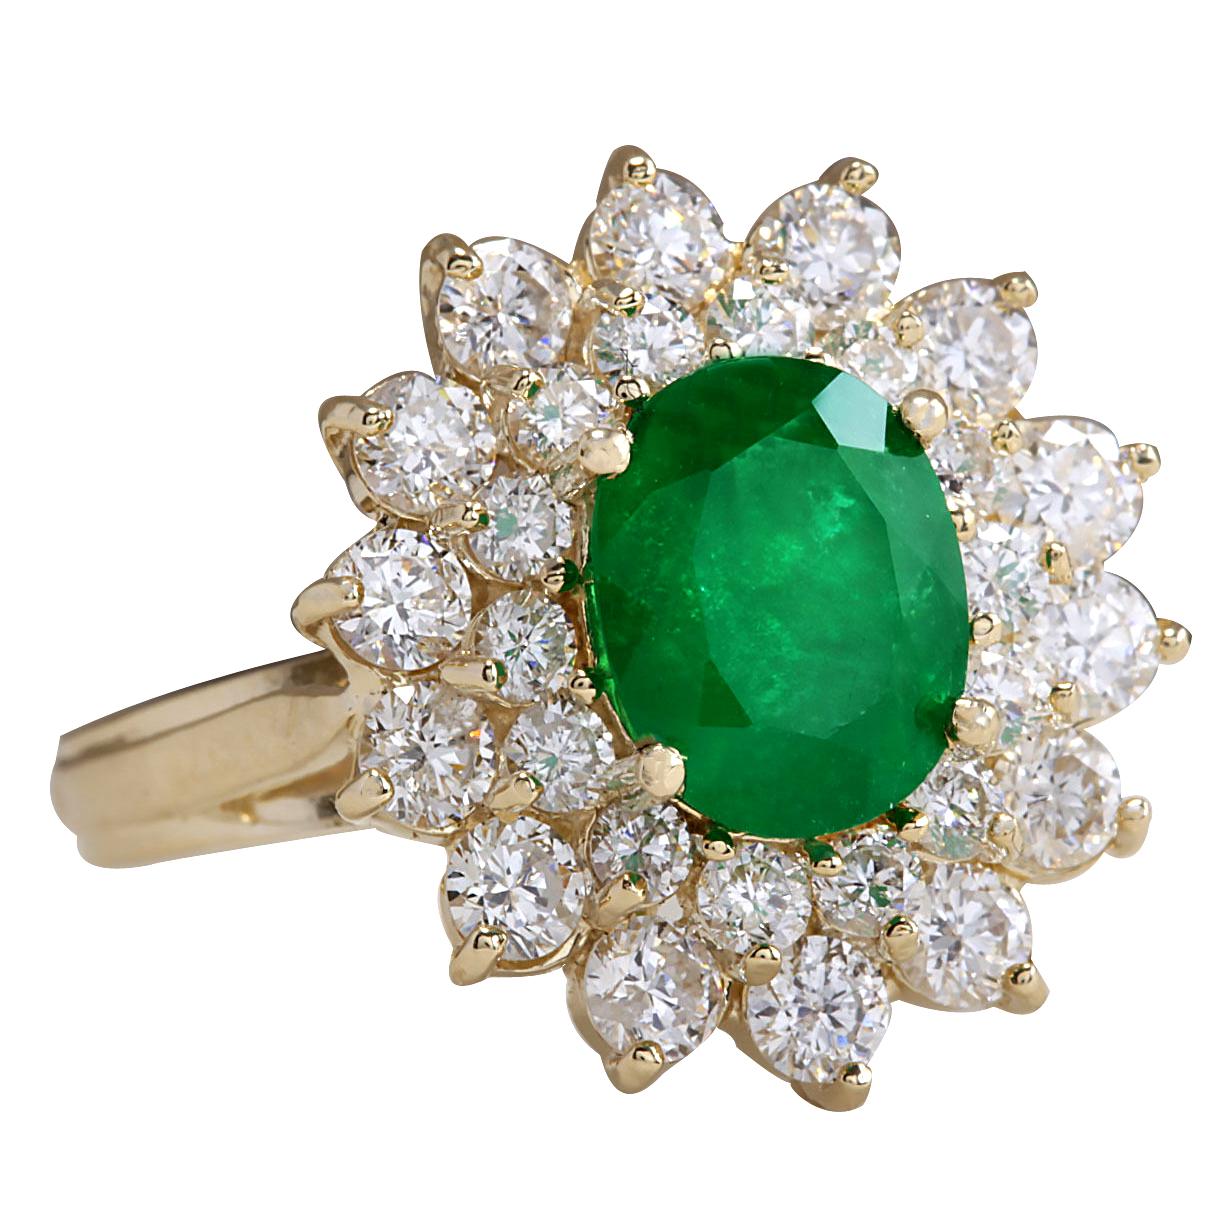 3.11 Carat Natural Emerald 14 Karat Yellow Gold Diamond Ring
Stamped: 14K Yellow Gold
Total Ring Weight: 5.0 Grams
Total Natural Emerald Weight is 1.61 Carat (Measures: 8.00x6.00 mm)
Color: Green
Total Natural Diamond Weight is 1.50 Carat
Color: